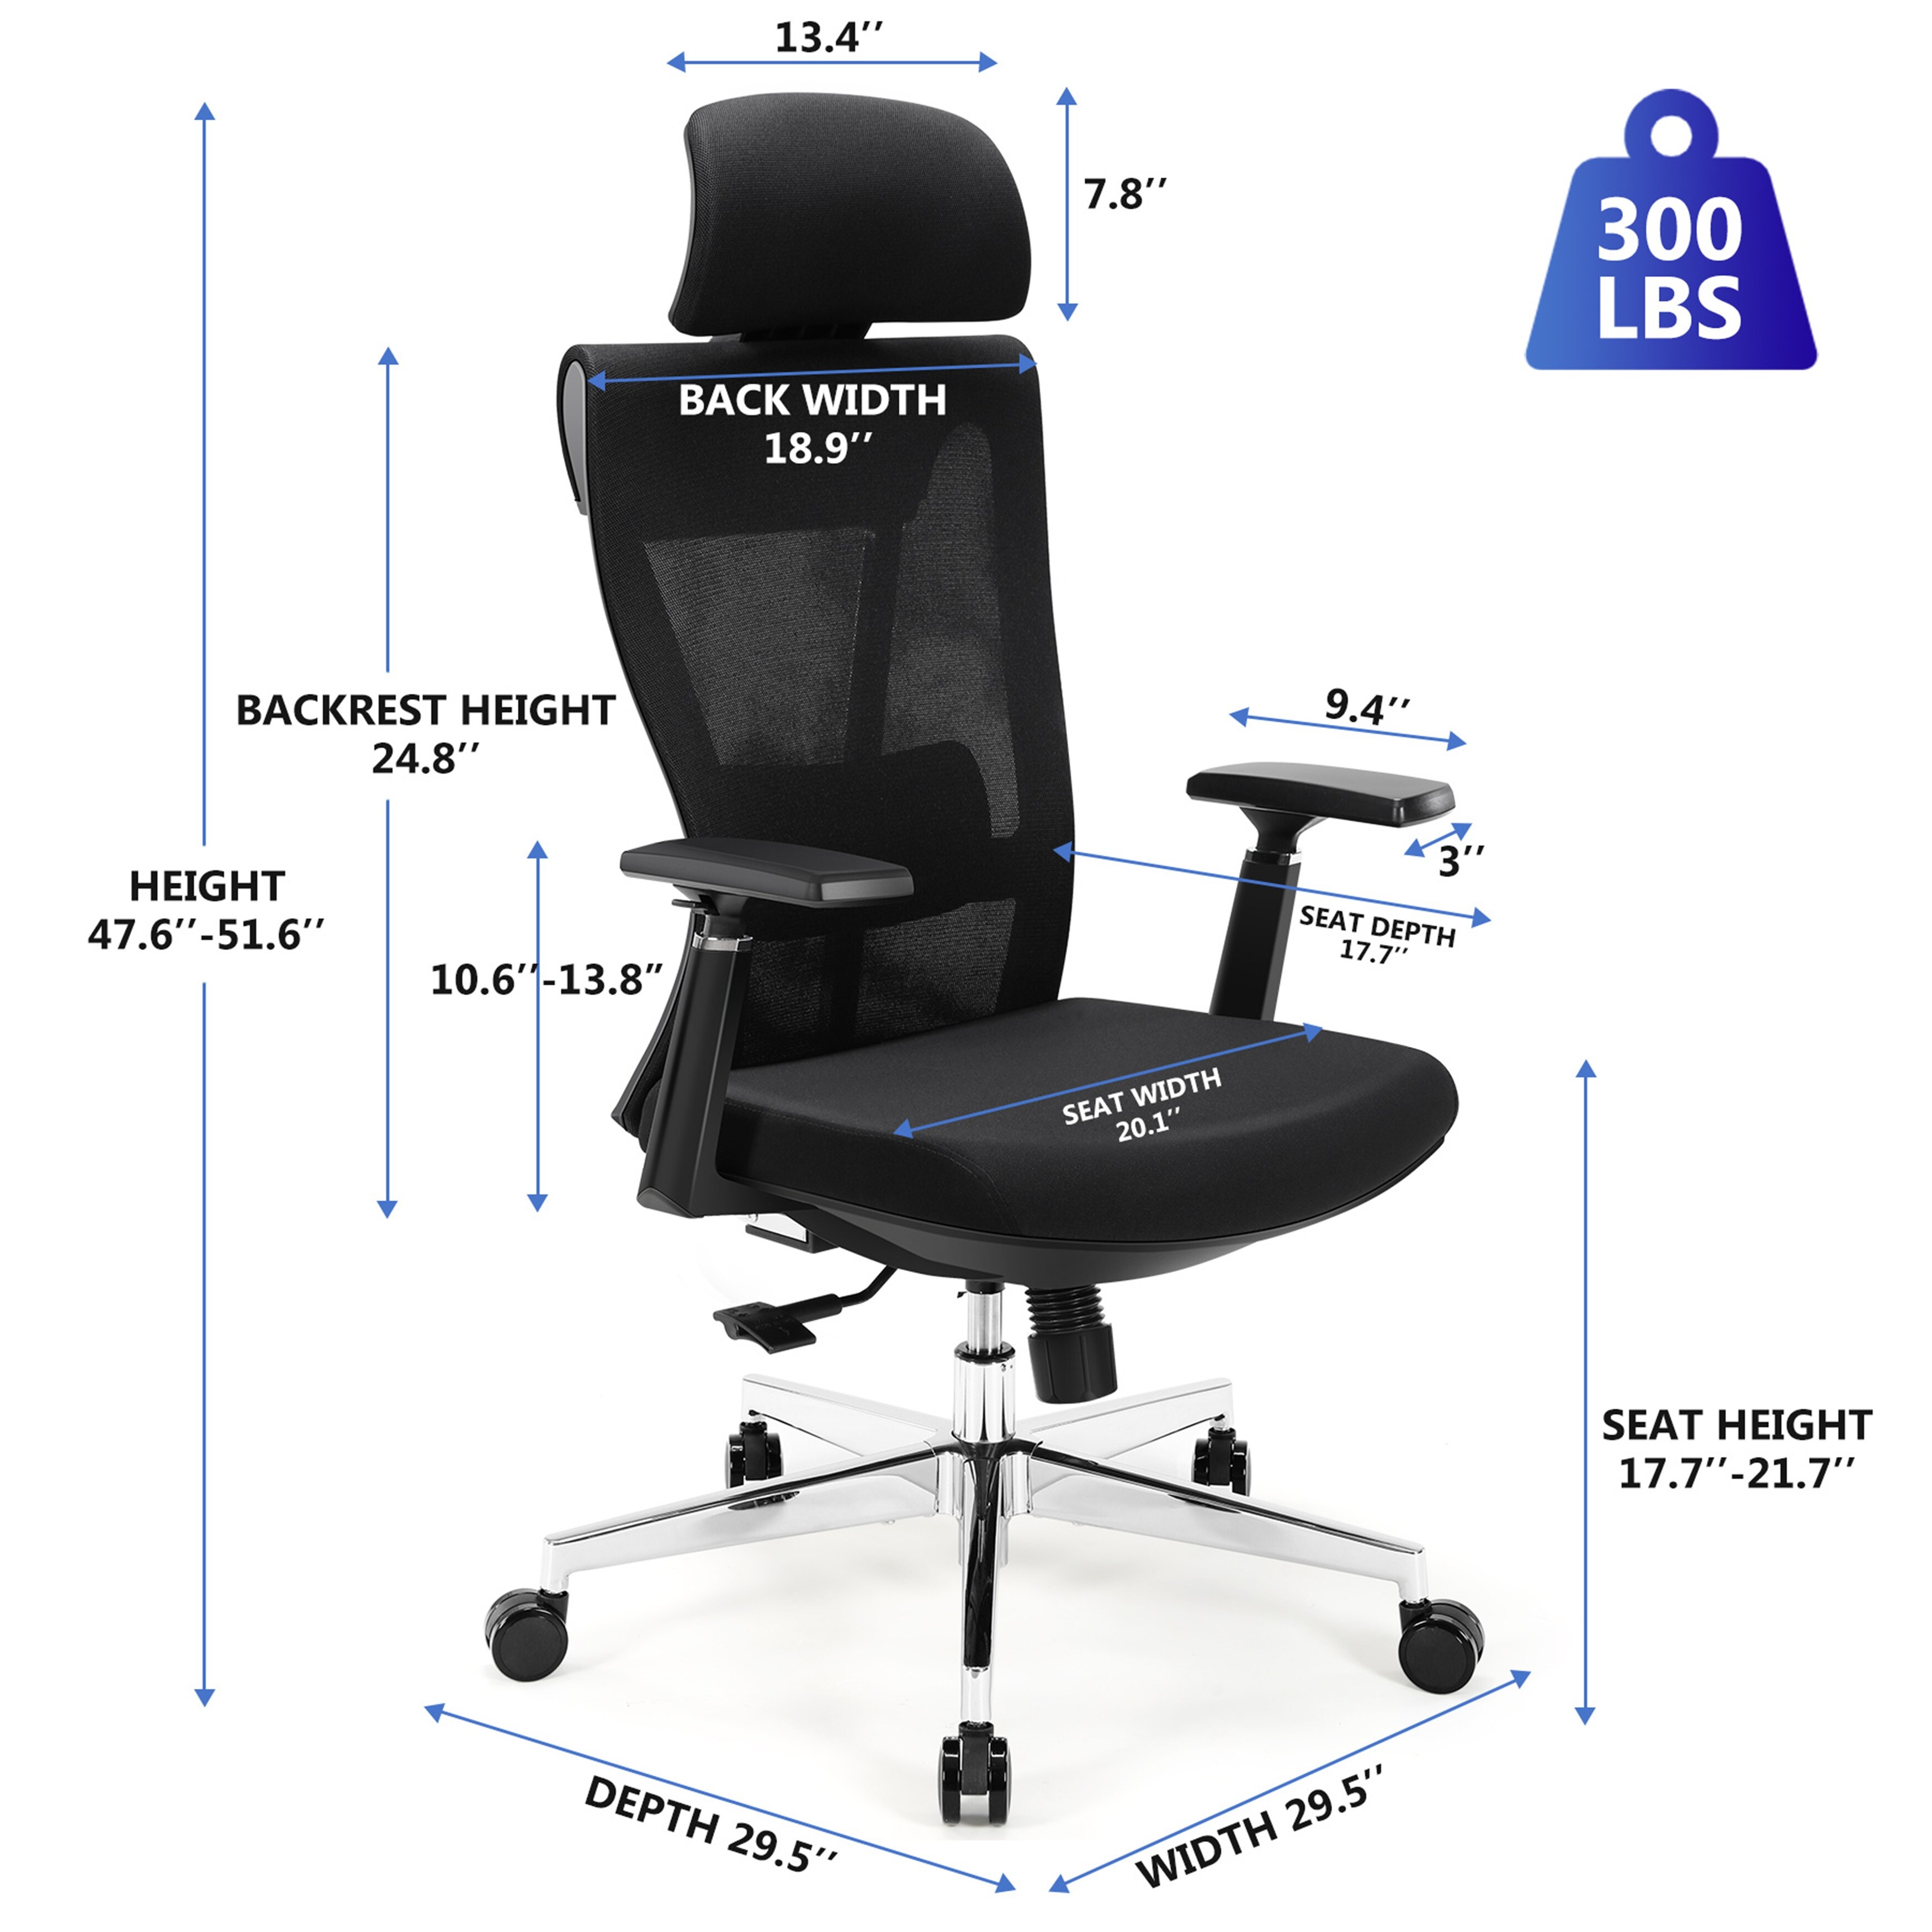 Ergonomic Office Chair, Desk Chair, High Back Mesh Chair with Lumbar Support